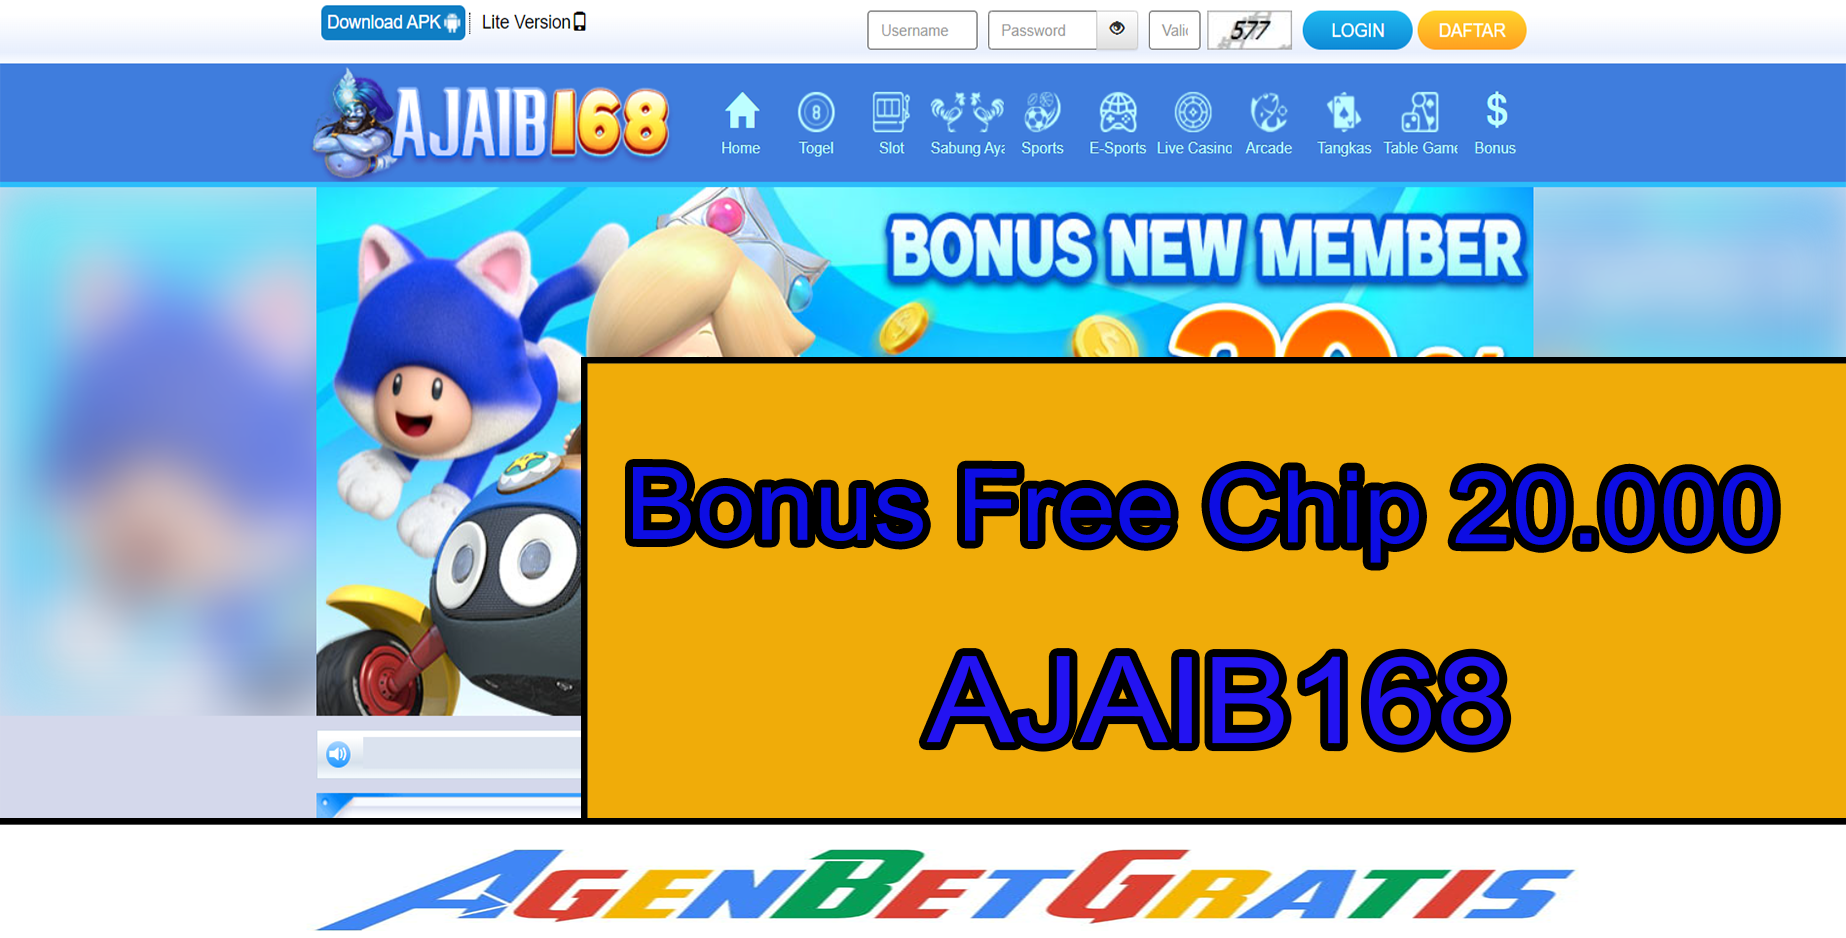 AJAIB168 - Bonus FreeChip 20.000